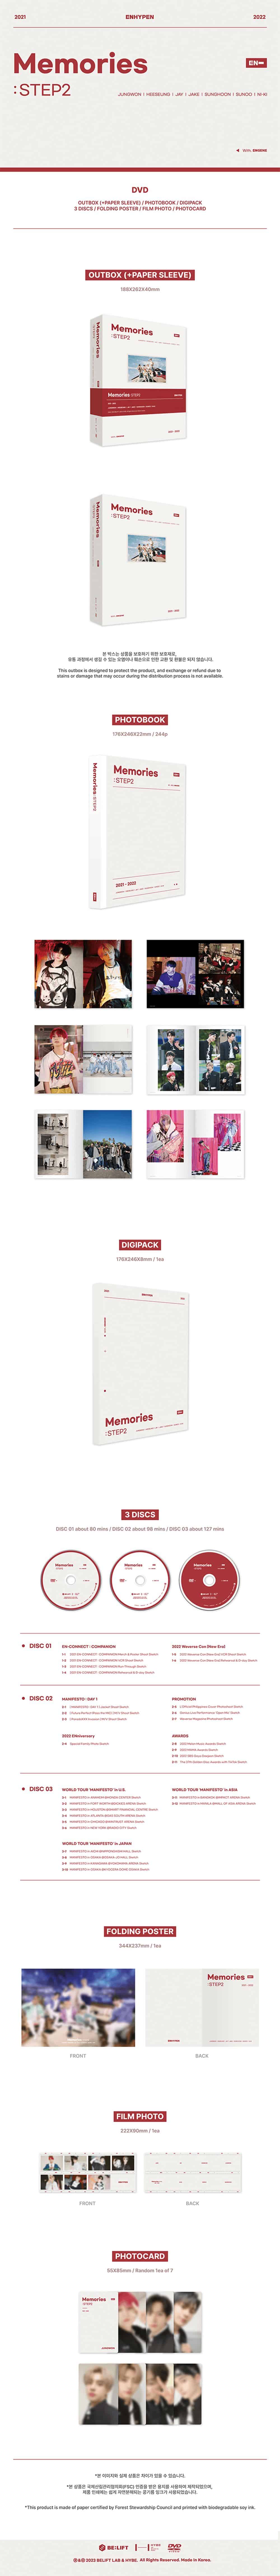 memories-step-two-dvd-wholesales